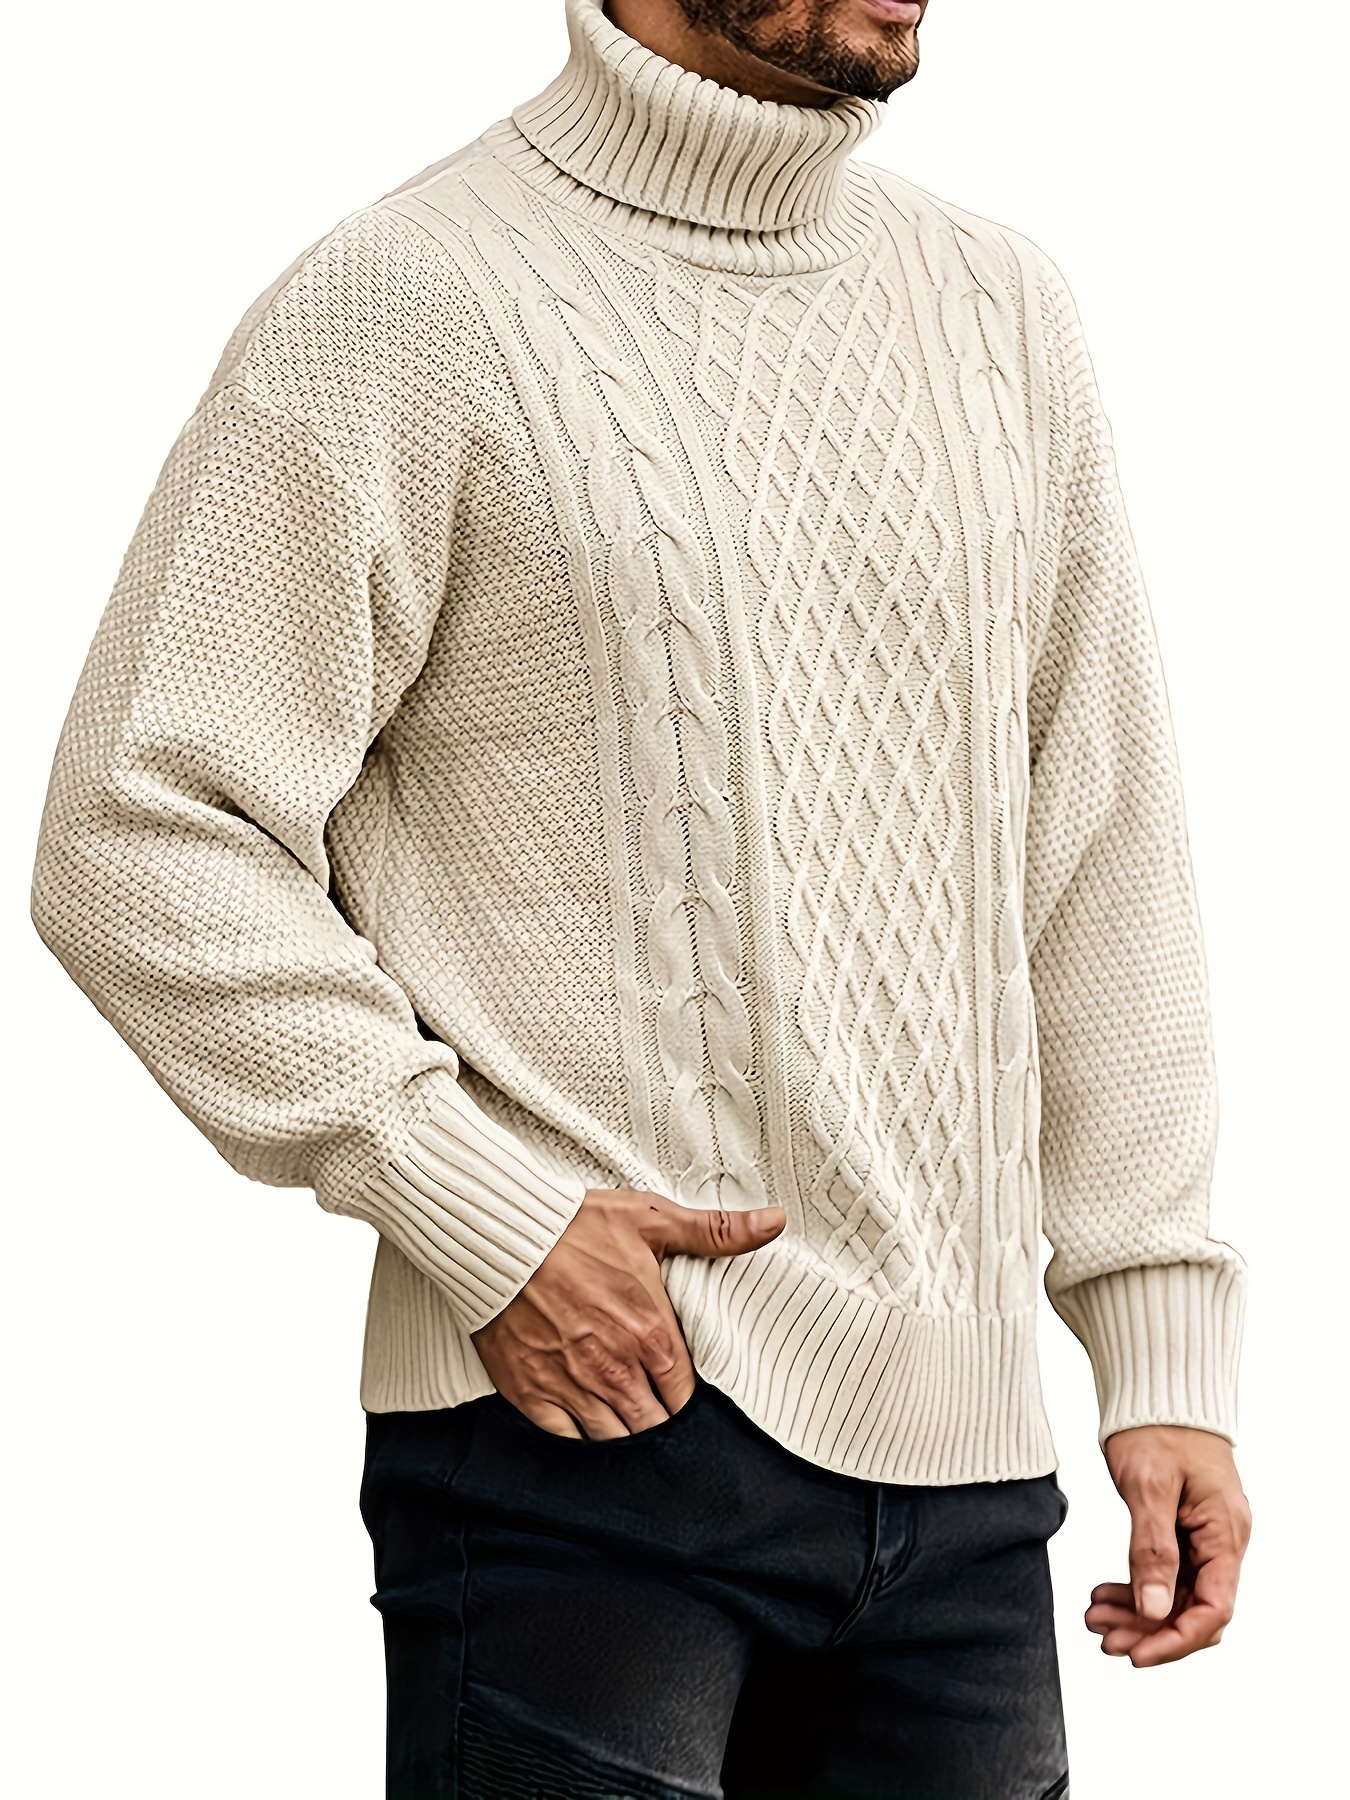 Hombres moda Casual manga larga cuello alto invierno tejido grueso Casual  cálido punto suéter suéter Adepaton CJWUS-3517